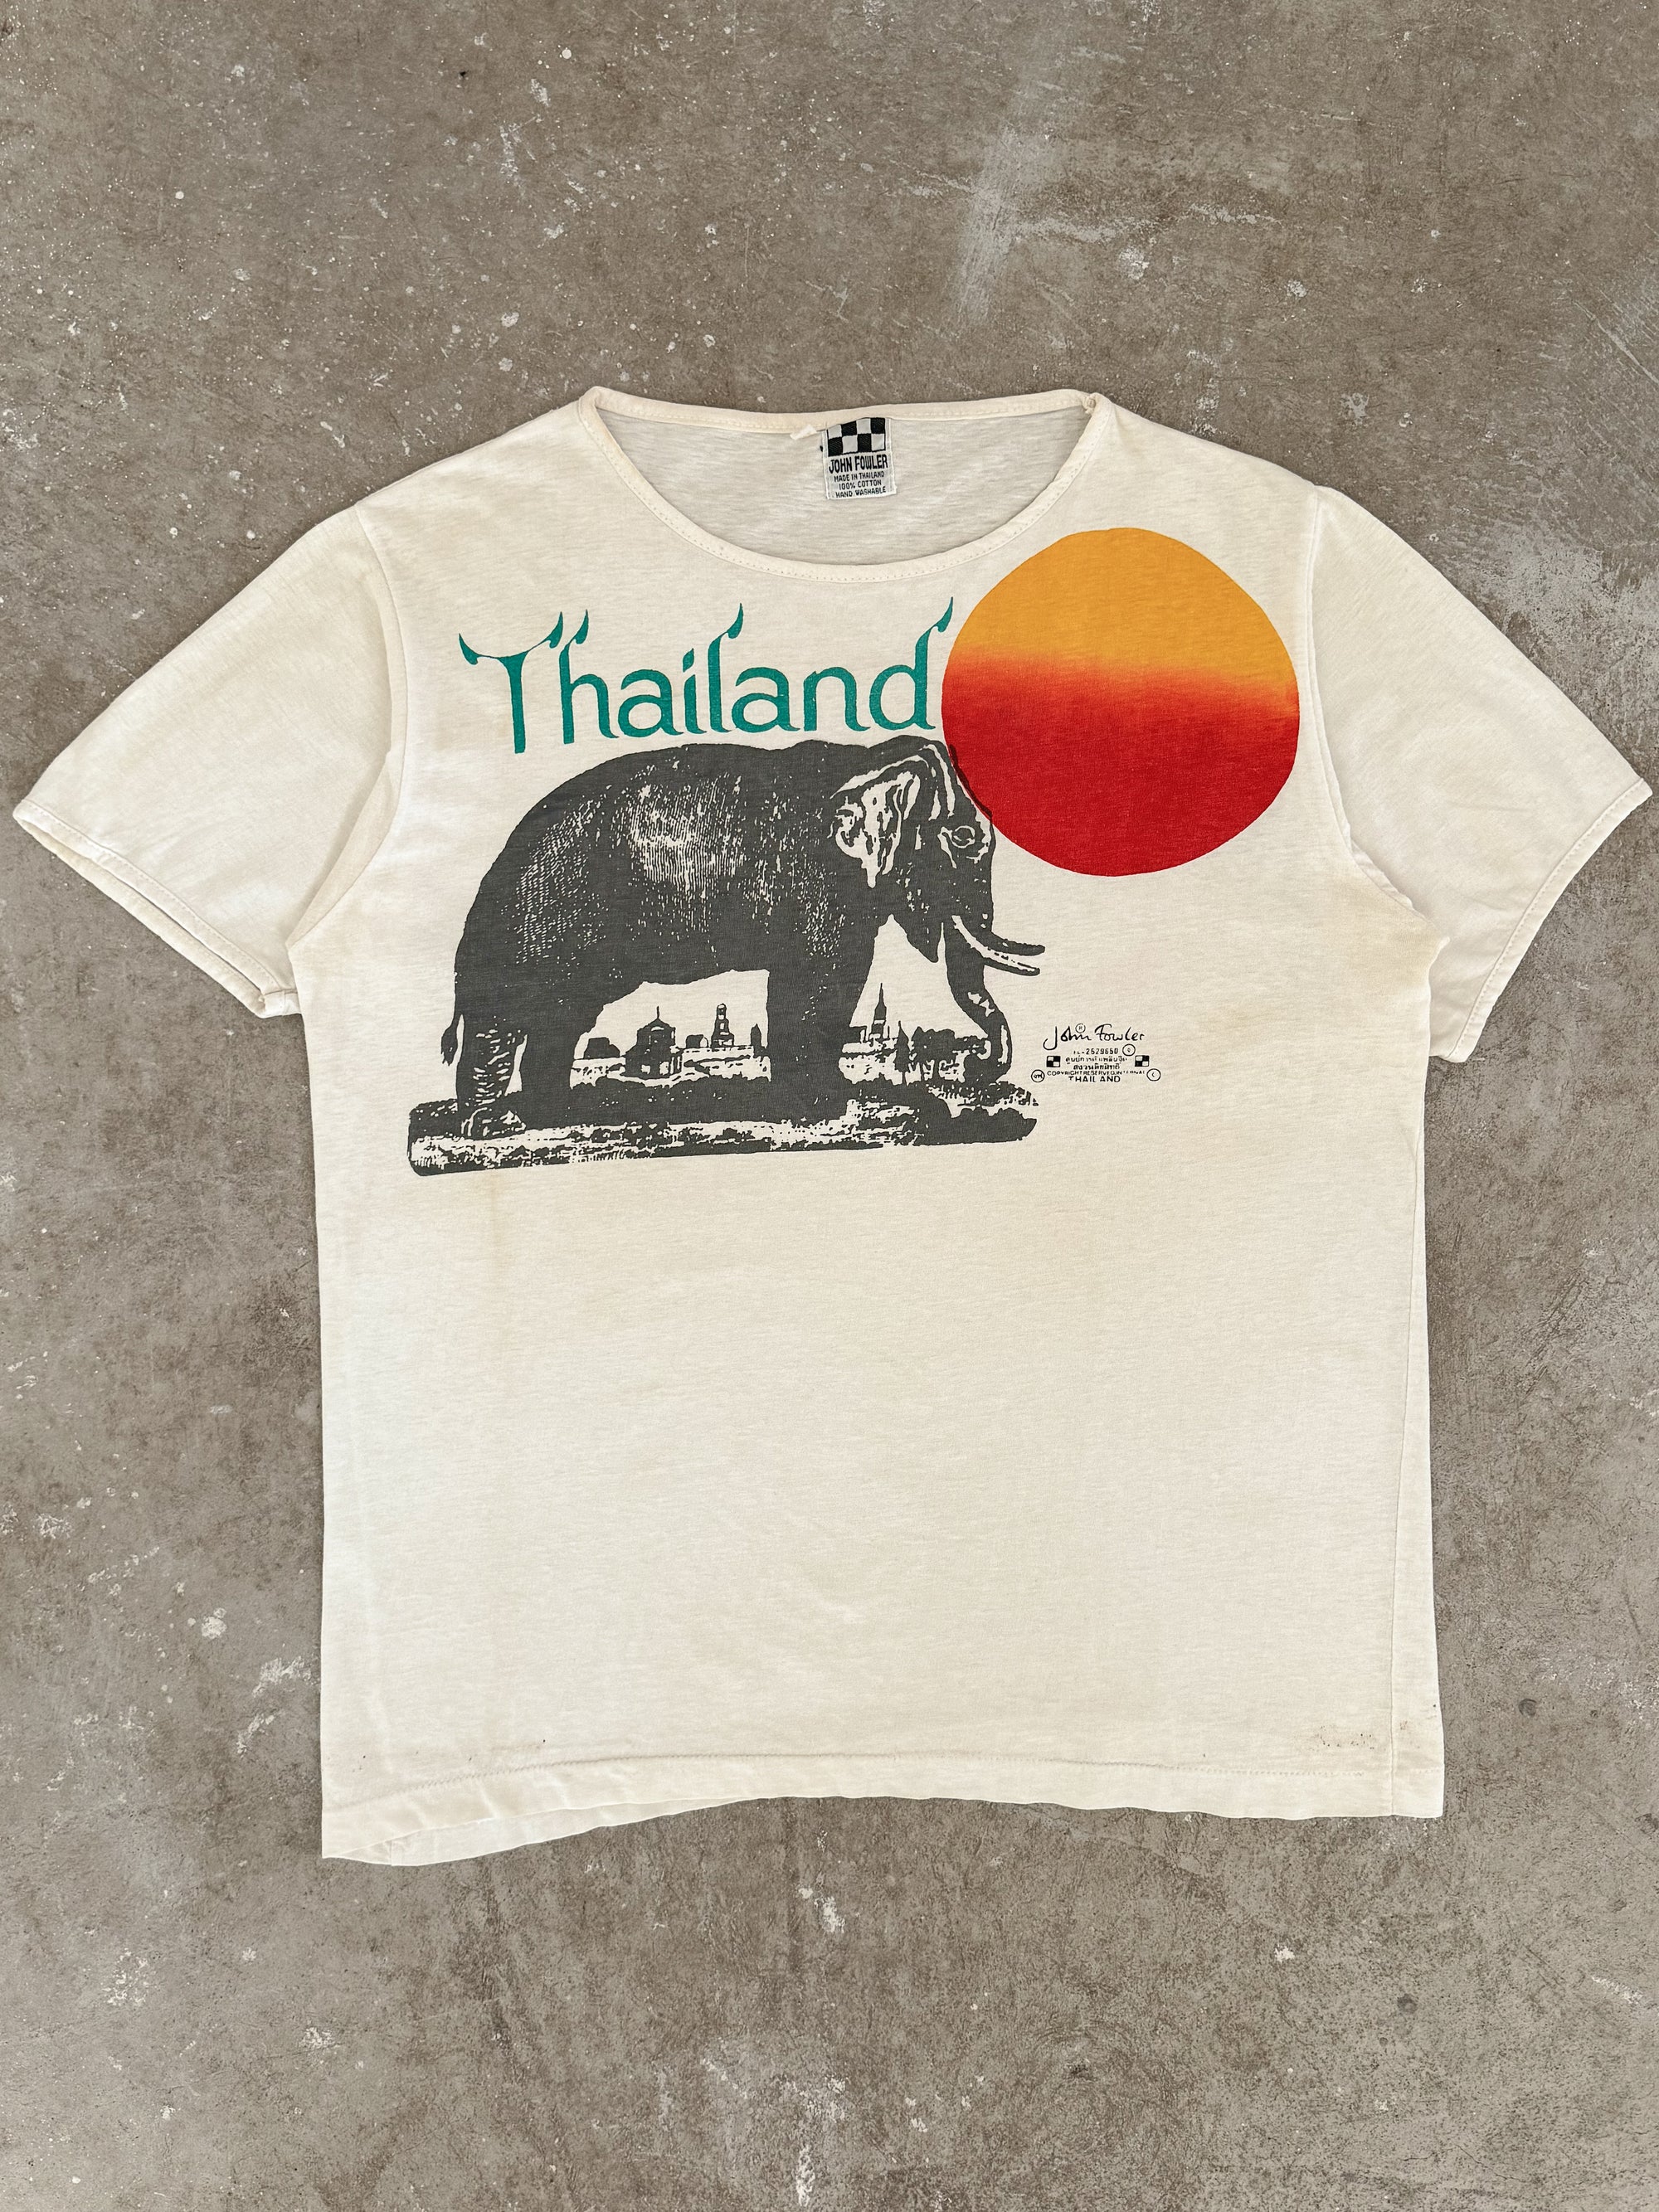 1970s "Thailand" Tee (M)